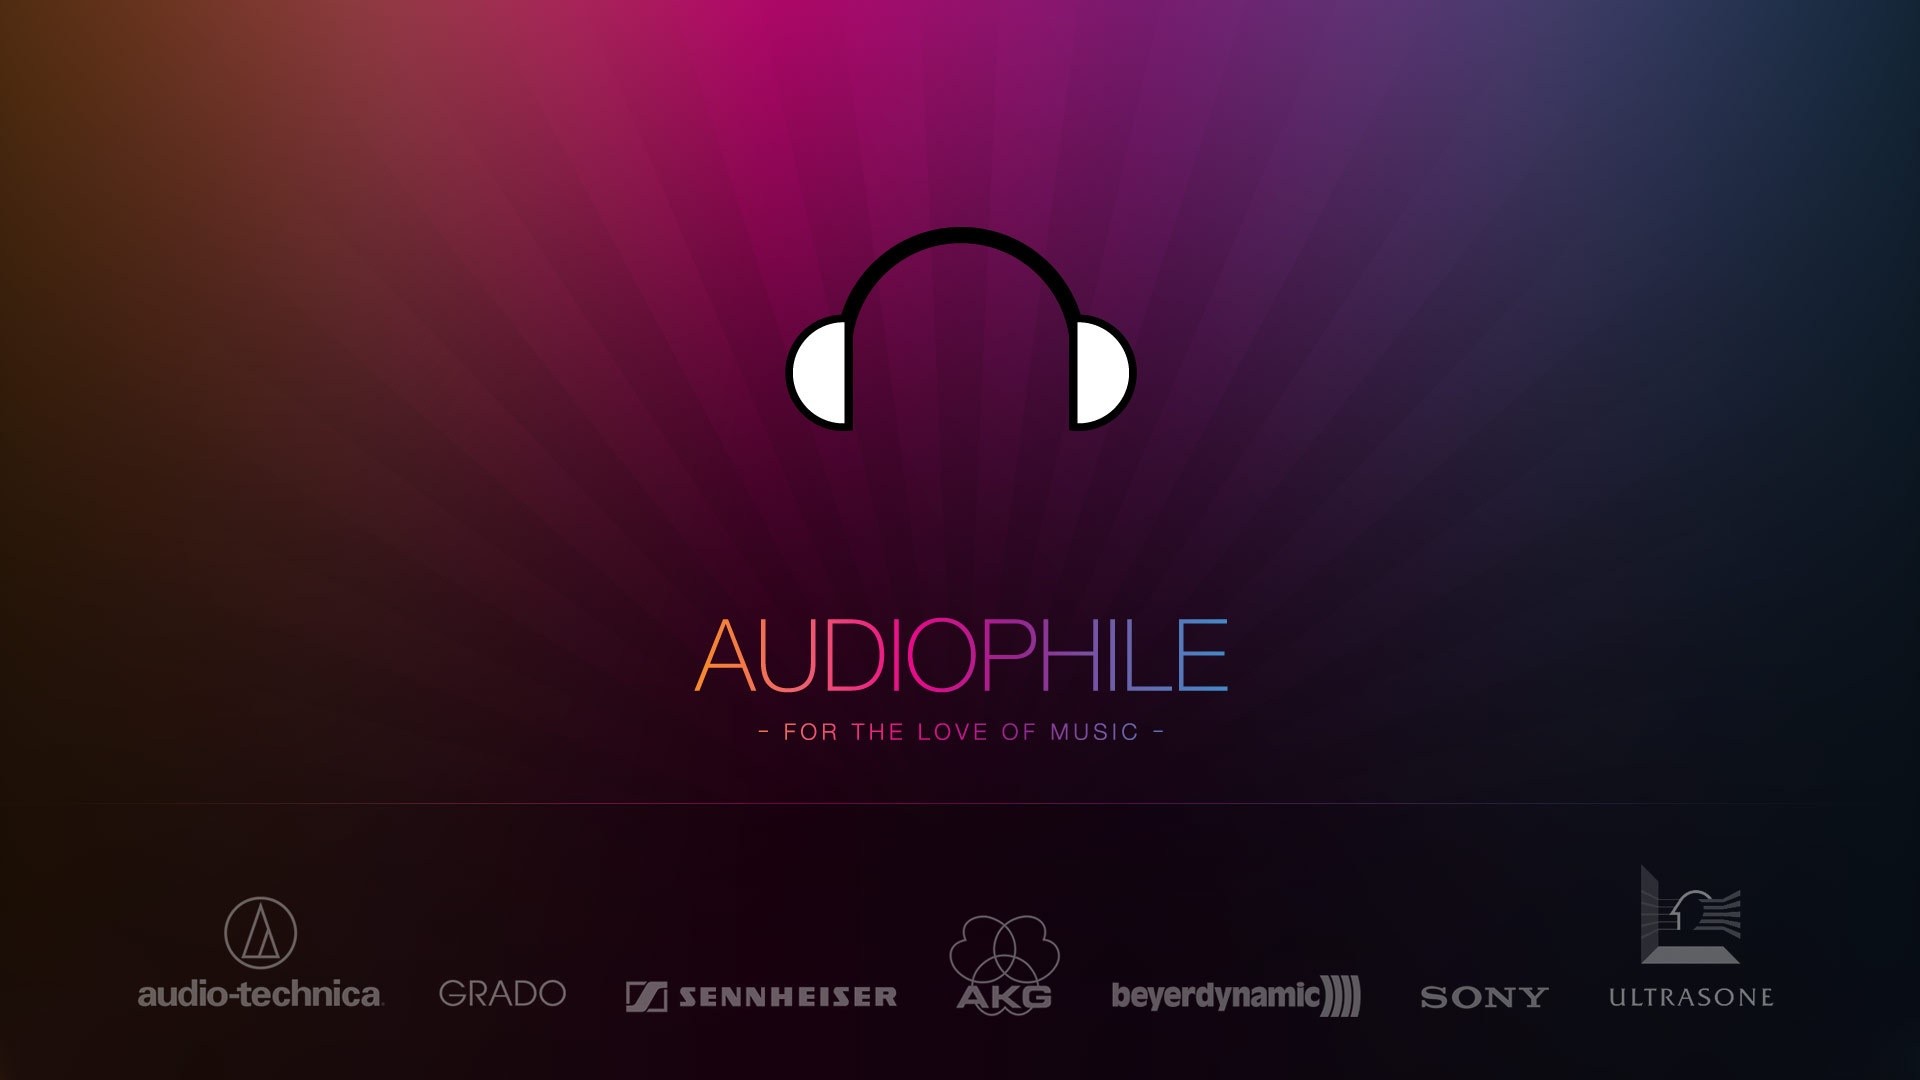 General 1920x1080 headphones typography colorful audio-technica spectrum music gradient logo Sennheiser AKG beyerdynamic Sony